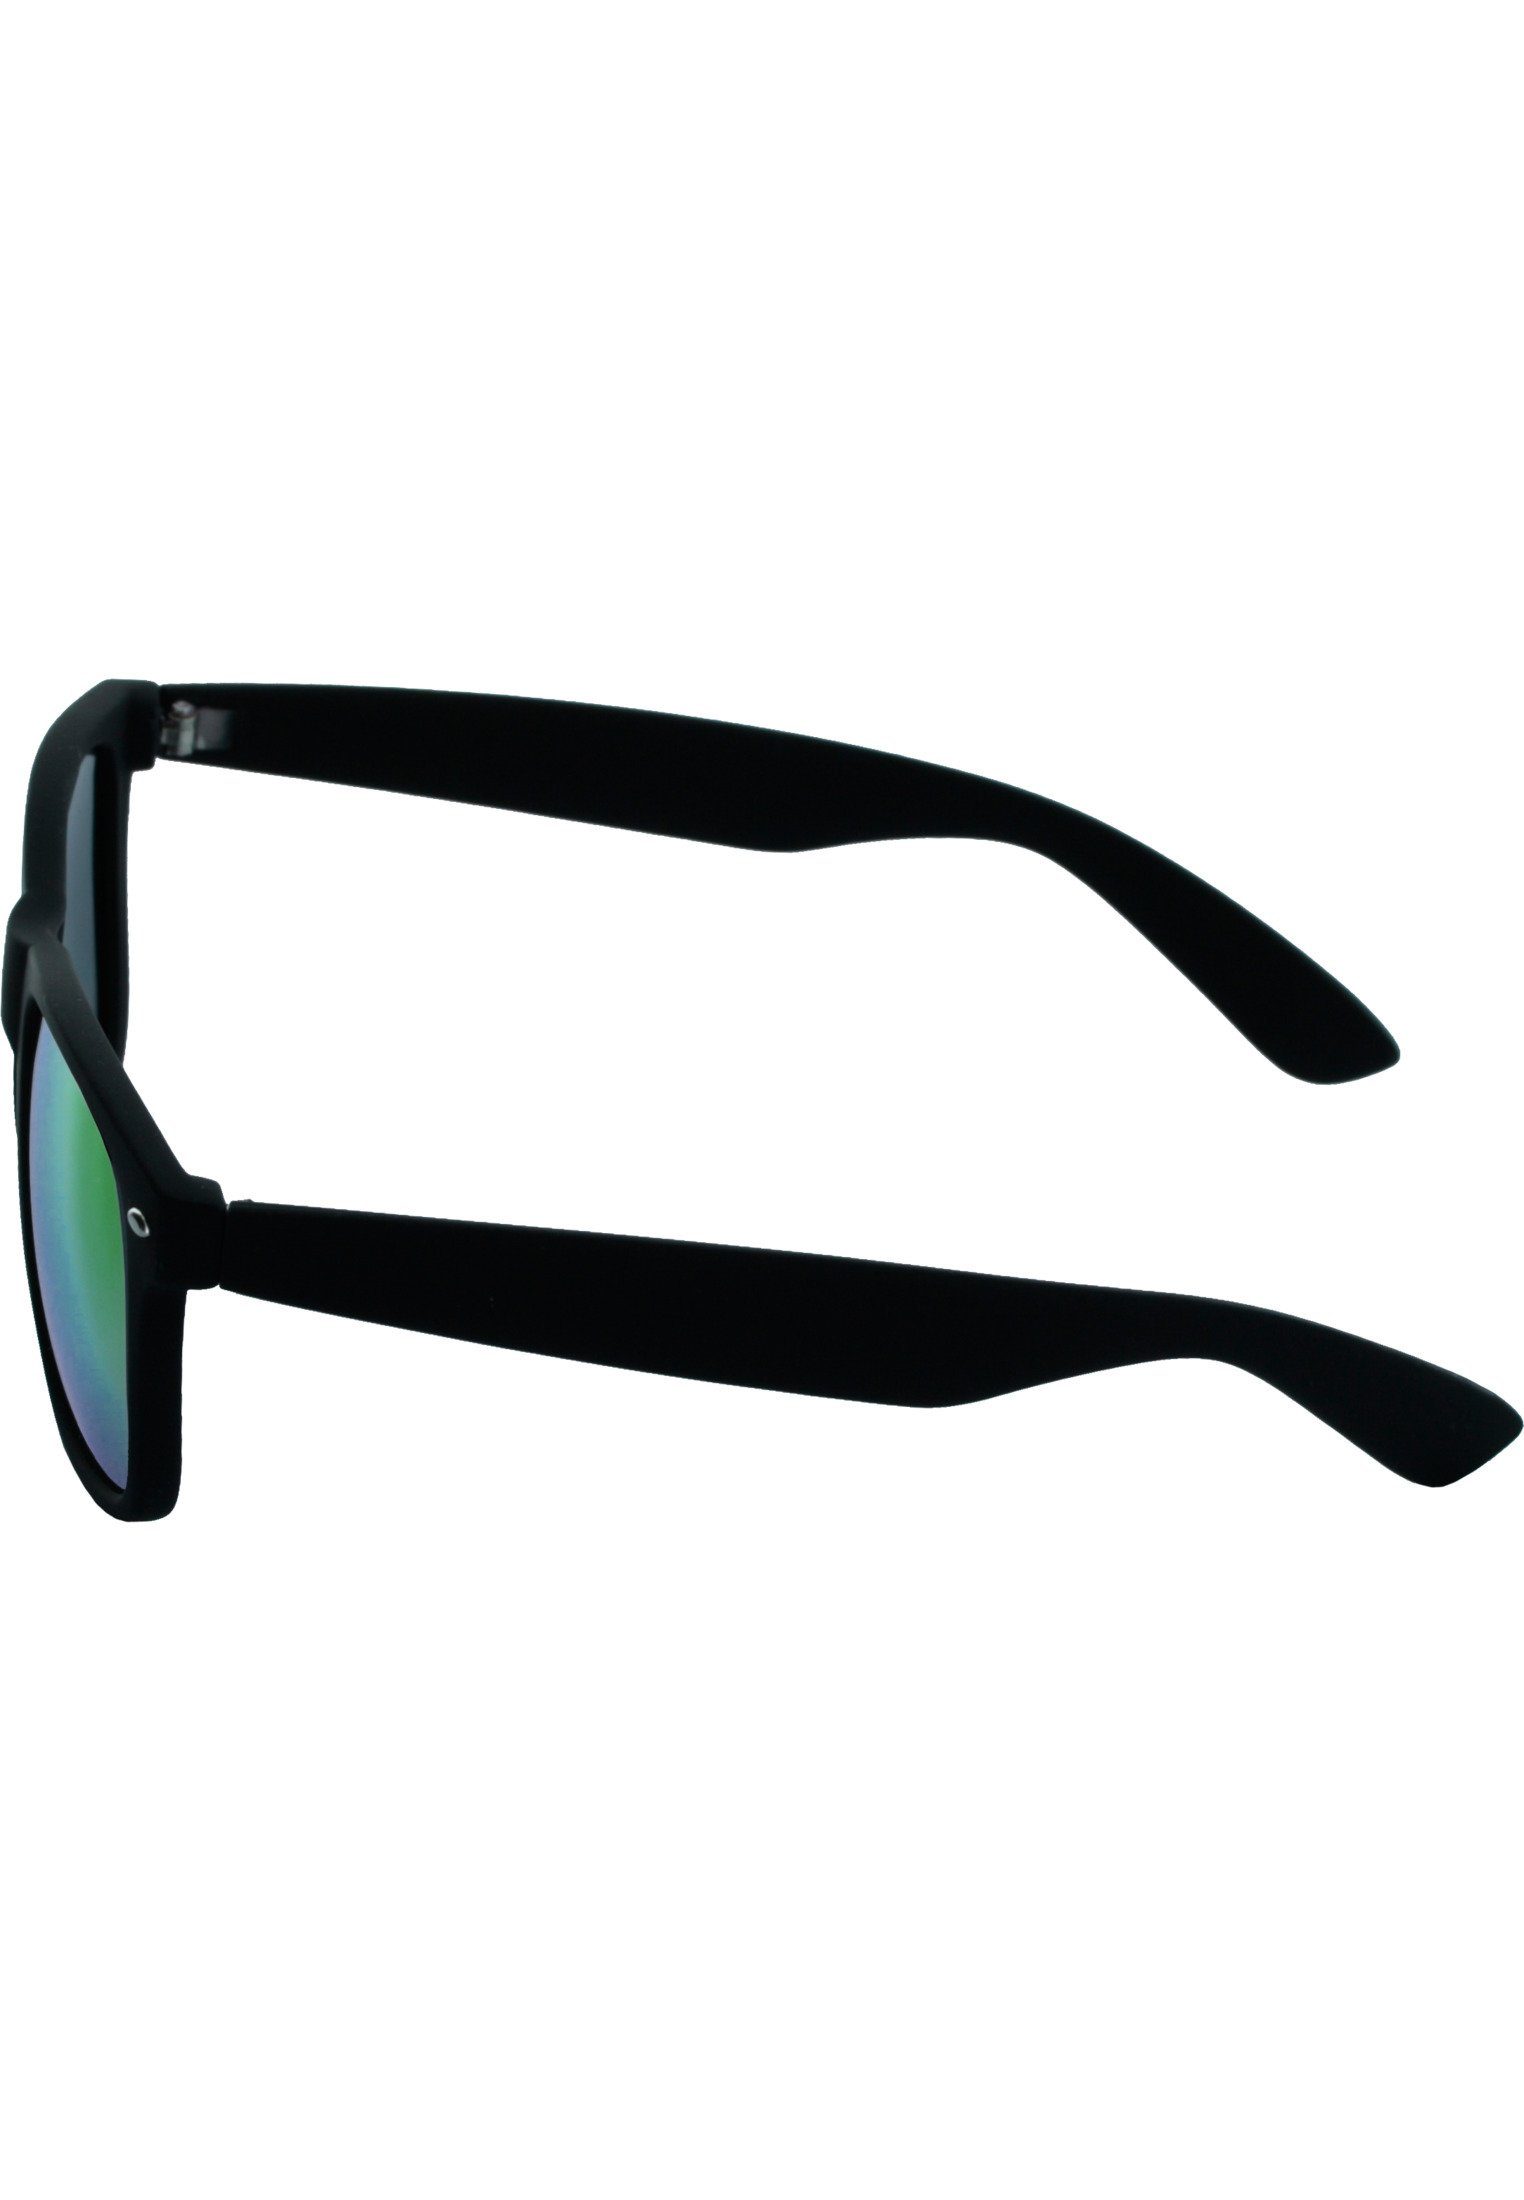 MSTRDS Sonnenbrille blk/blue Mirror Accessoires Sunglasses Likoma